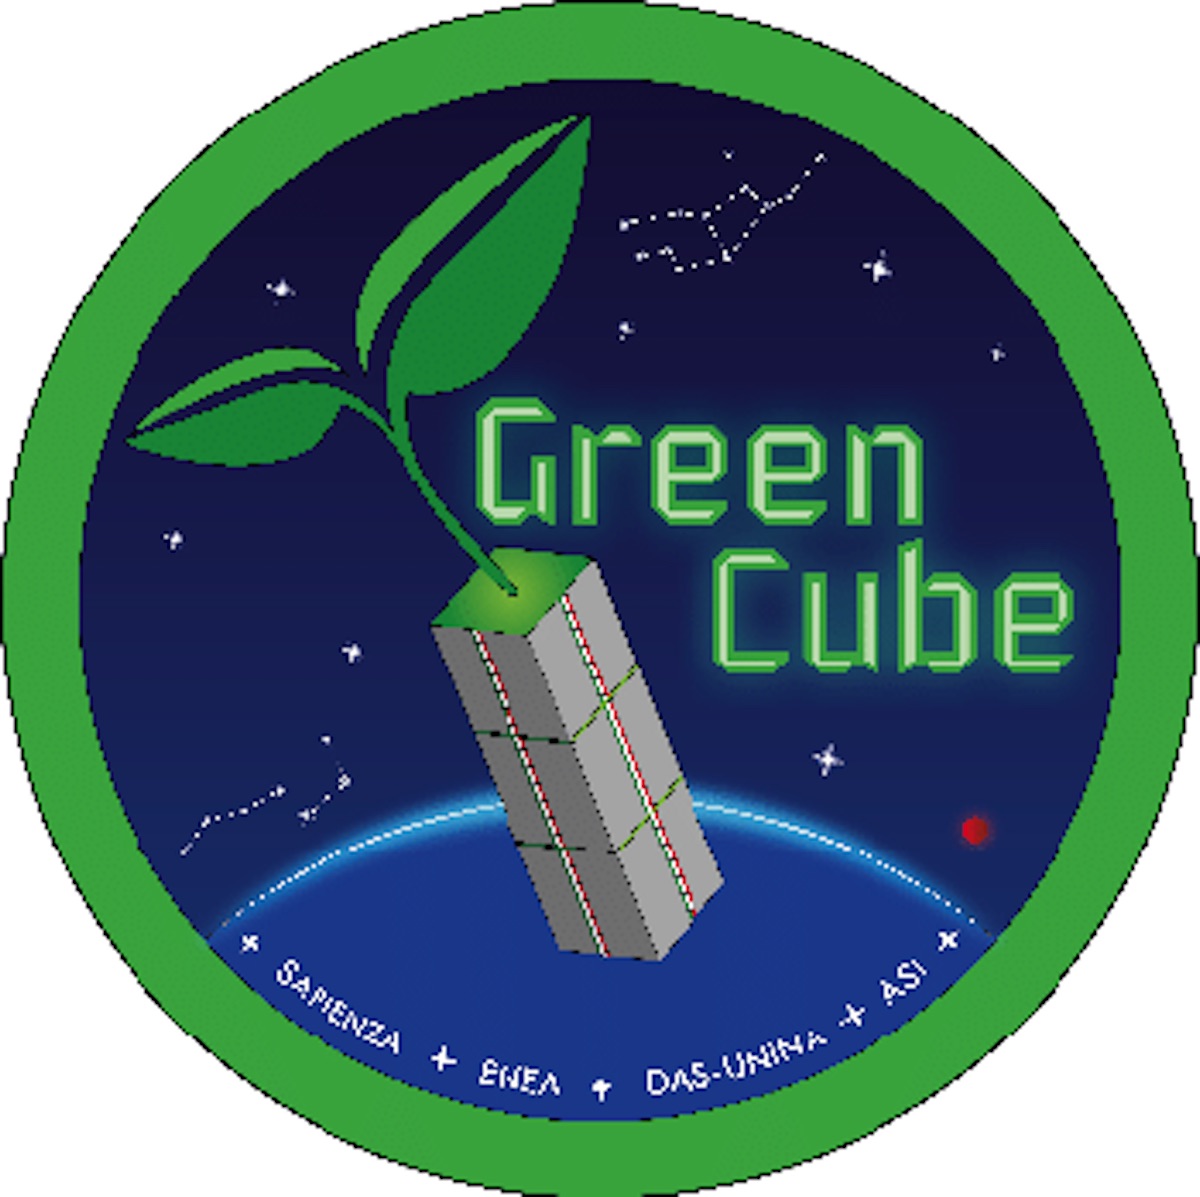 Mission logo of GreenCube copy